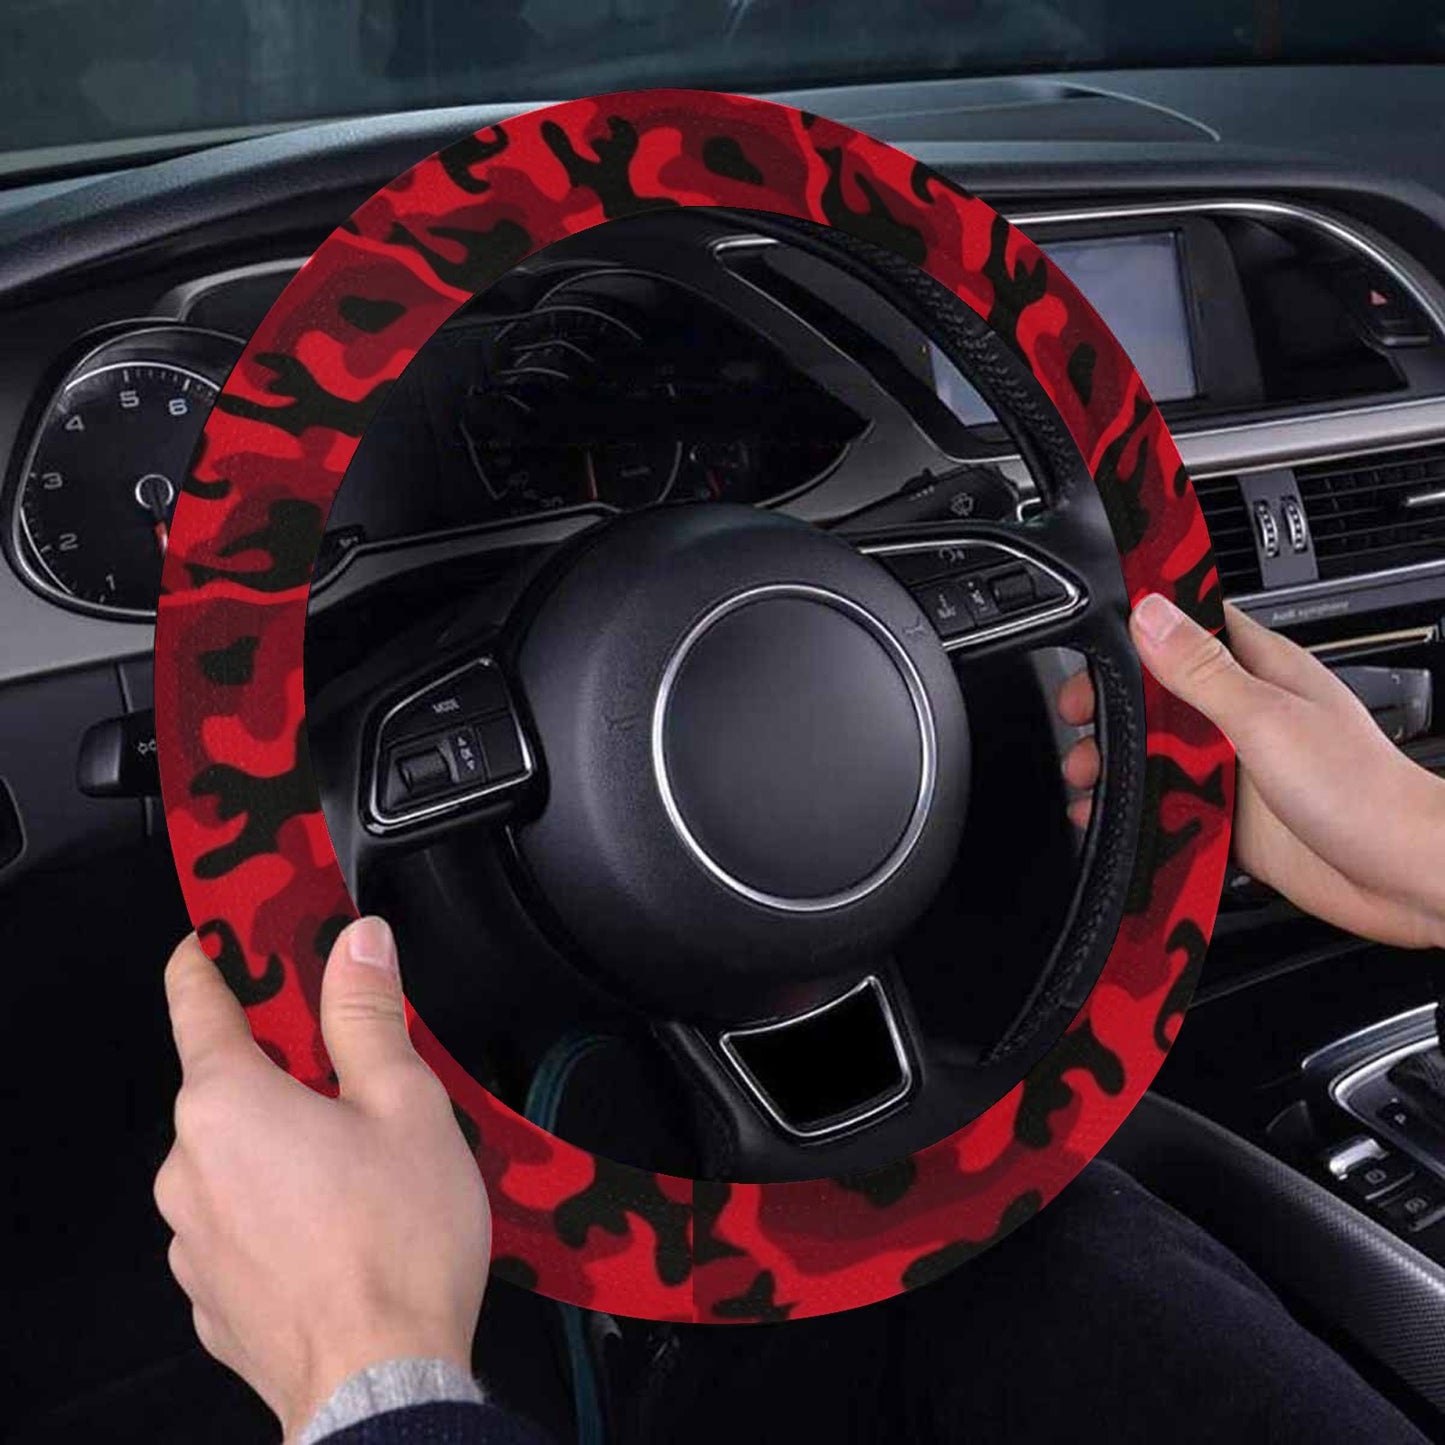 Red Black Camo Steering Wheel Cover Anti-Slip Neoprene, Camouflage Driving Print Car Auto Wrap Protector Men Women Accessories 15 Inch